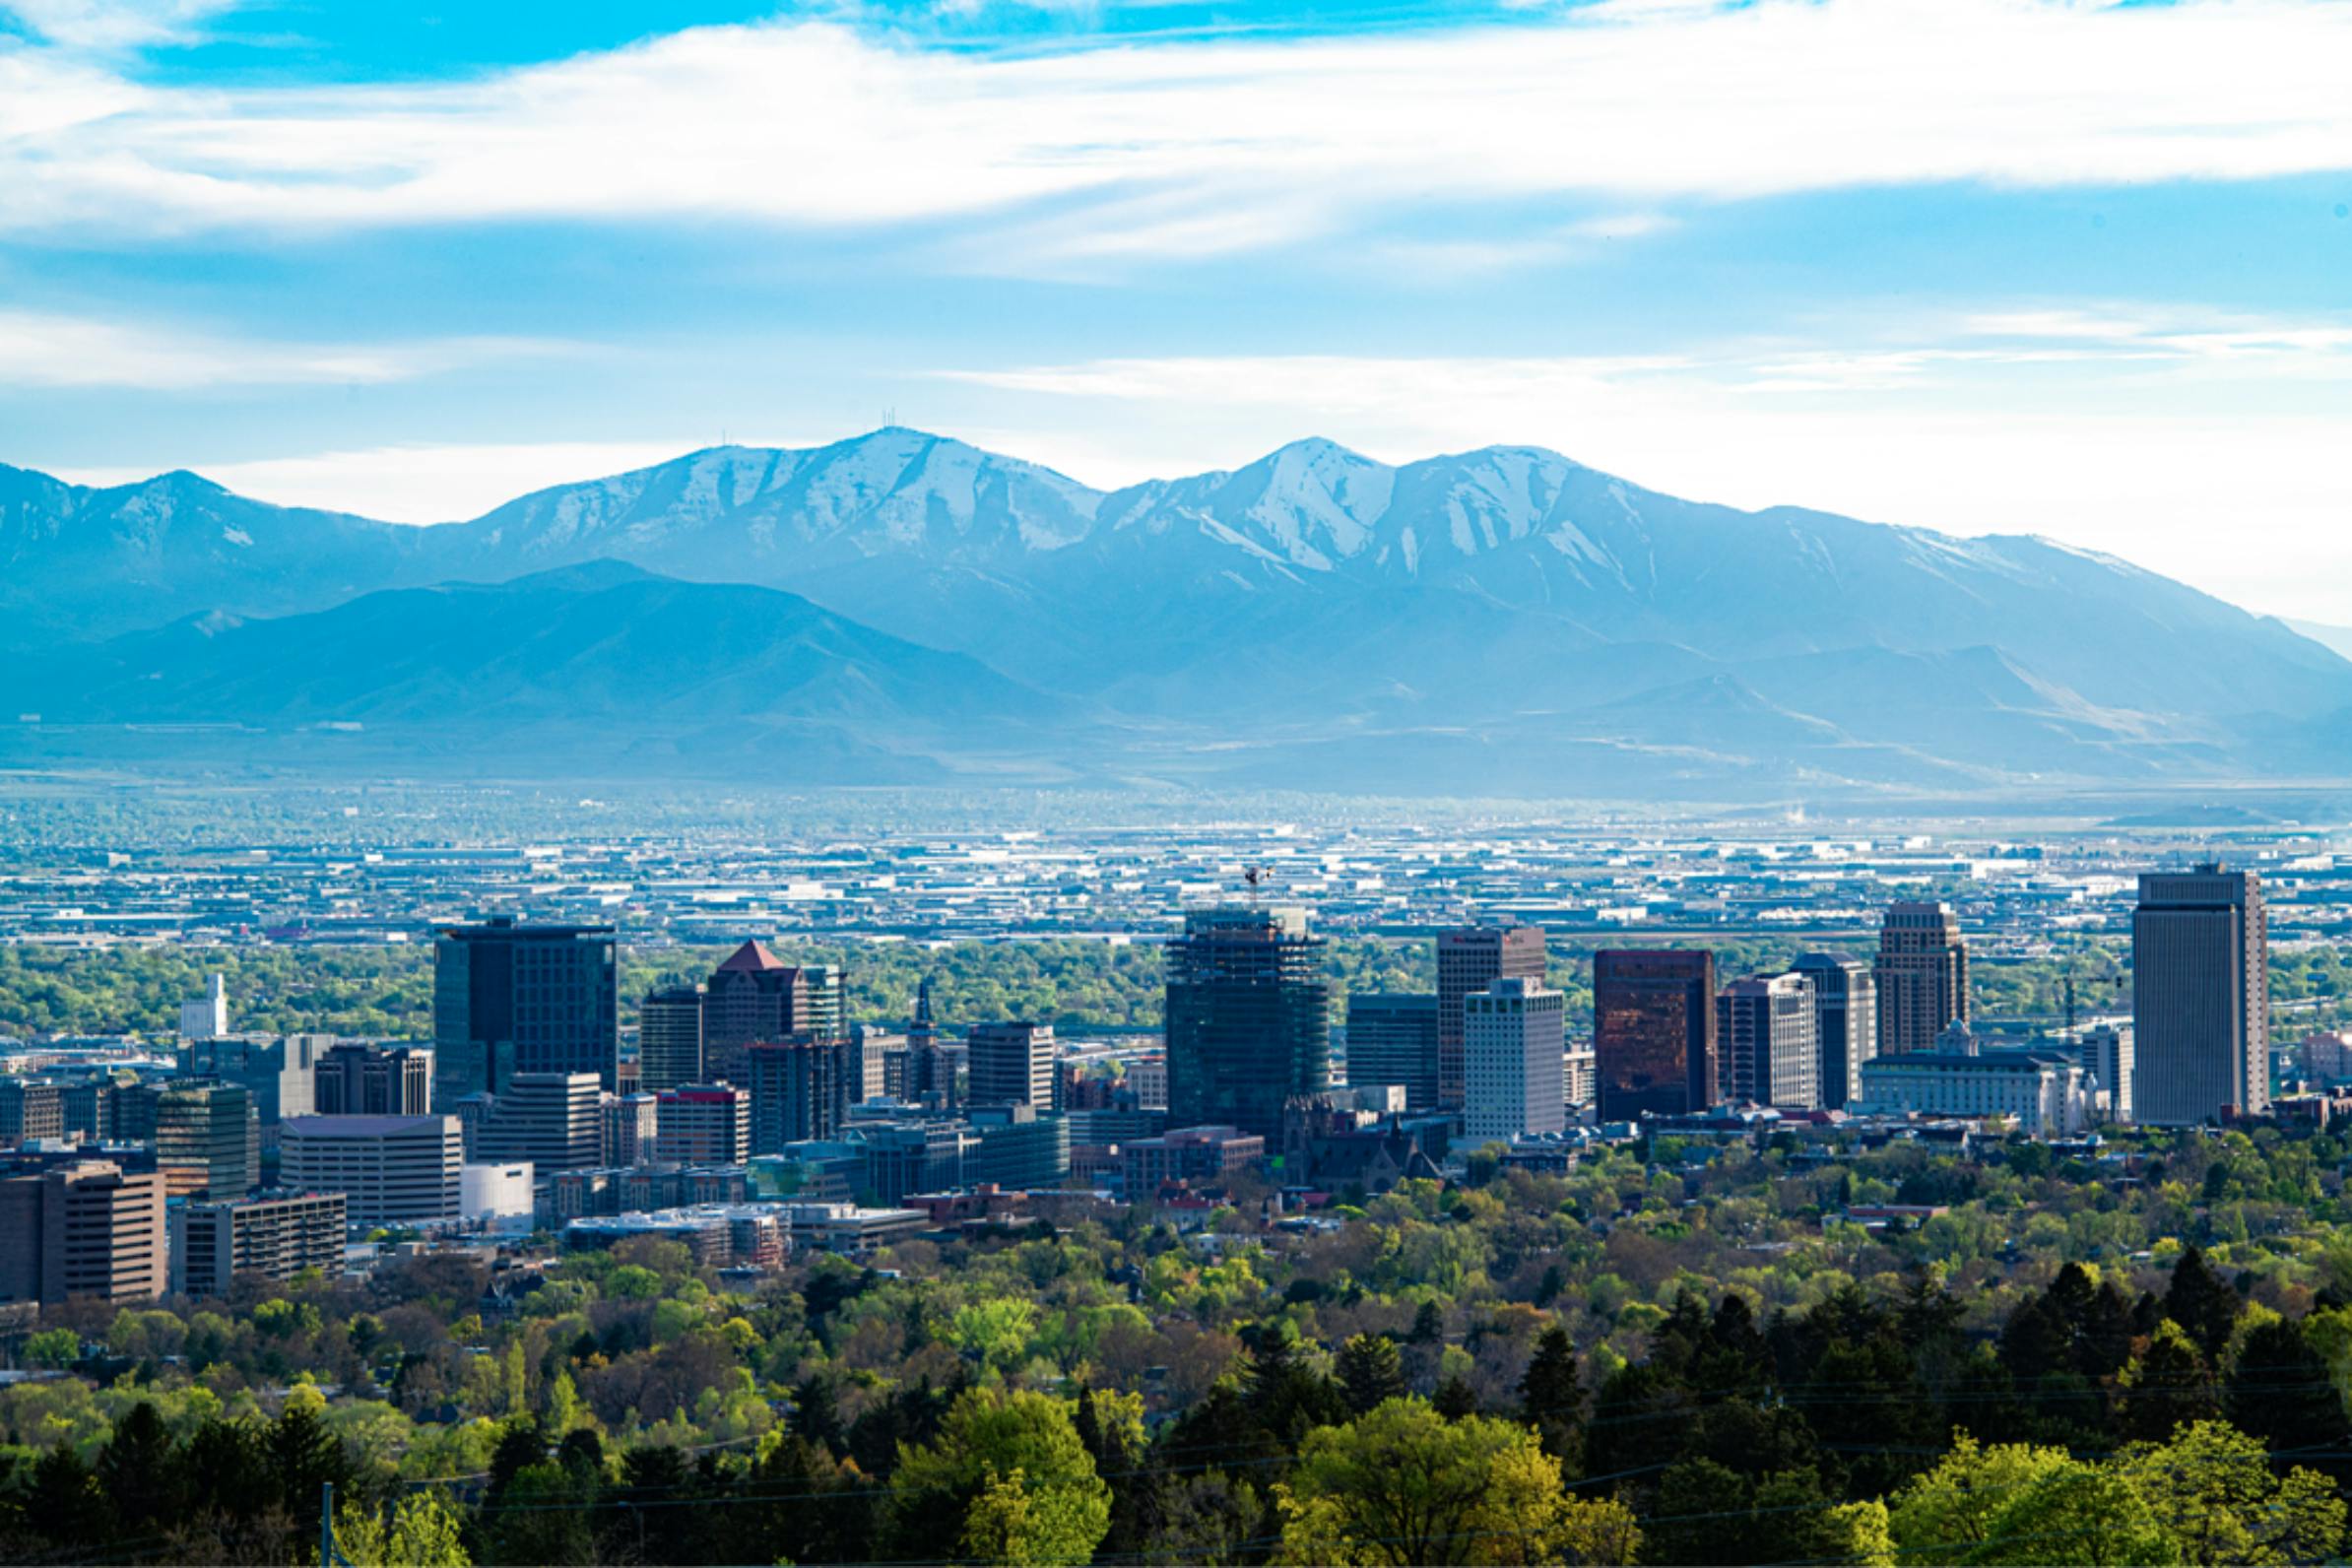 A scenic photo of Salt Lake City, Utah